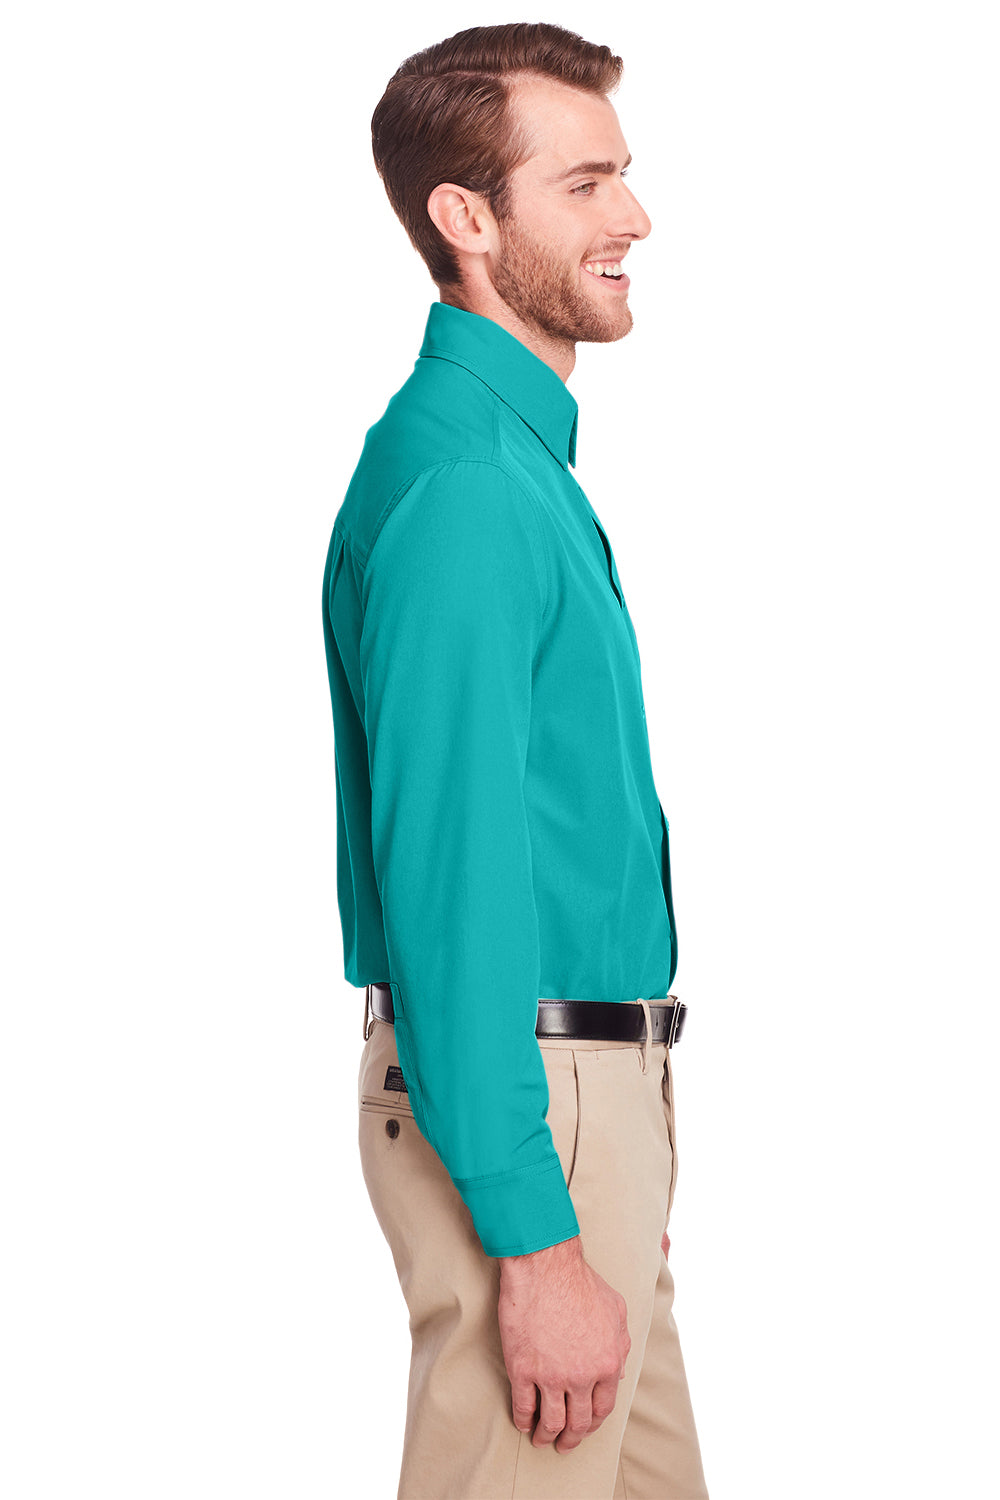 UltraClub UC500 Mens Bradley Performance Moisture Wicking Long Sleeve Button Down Shirt w/ Pocket Jade Green Side